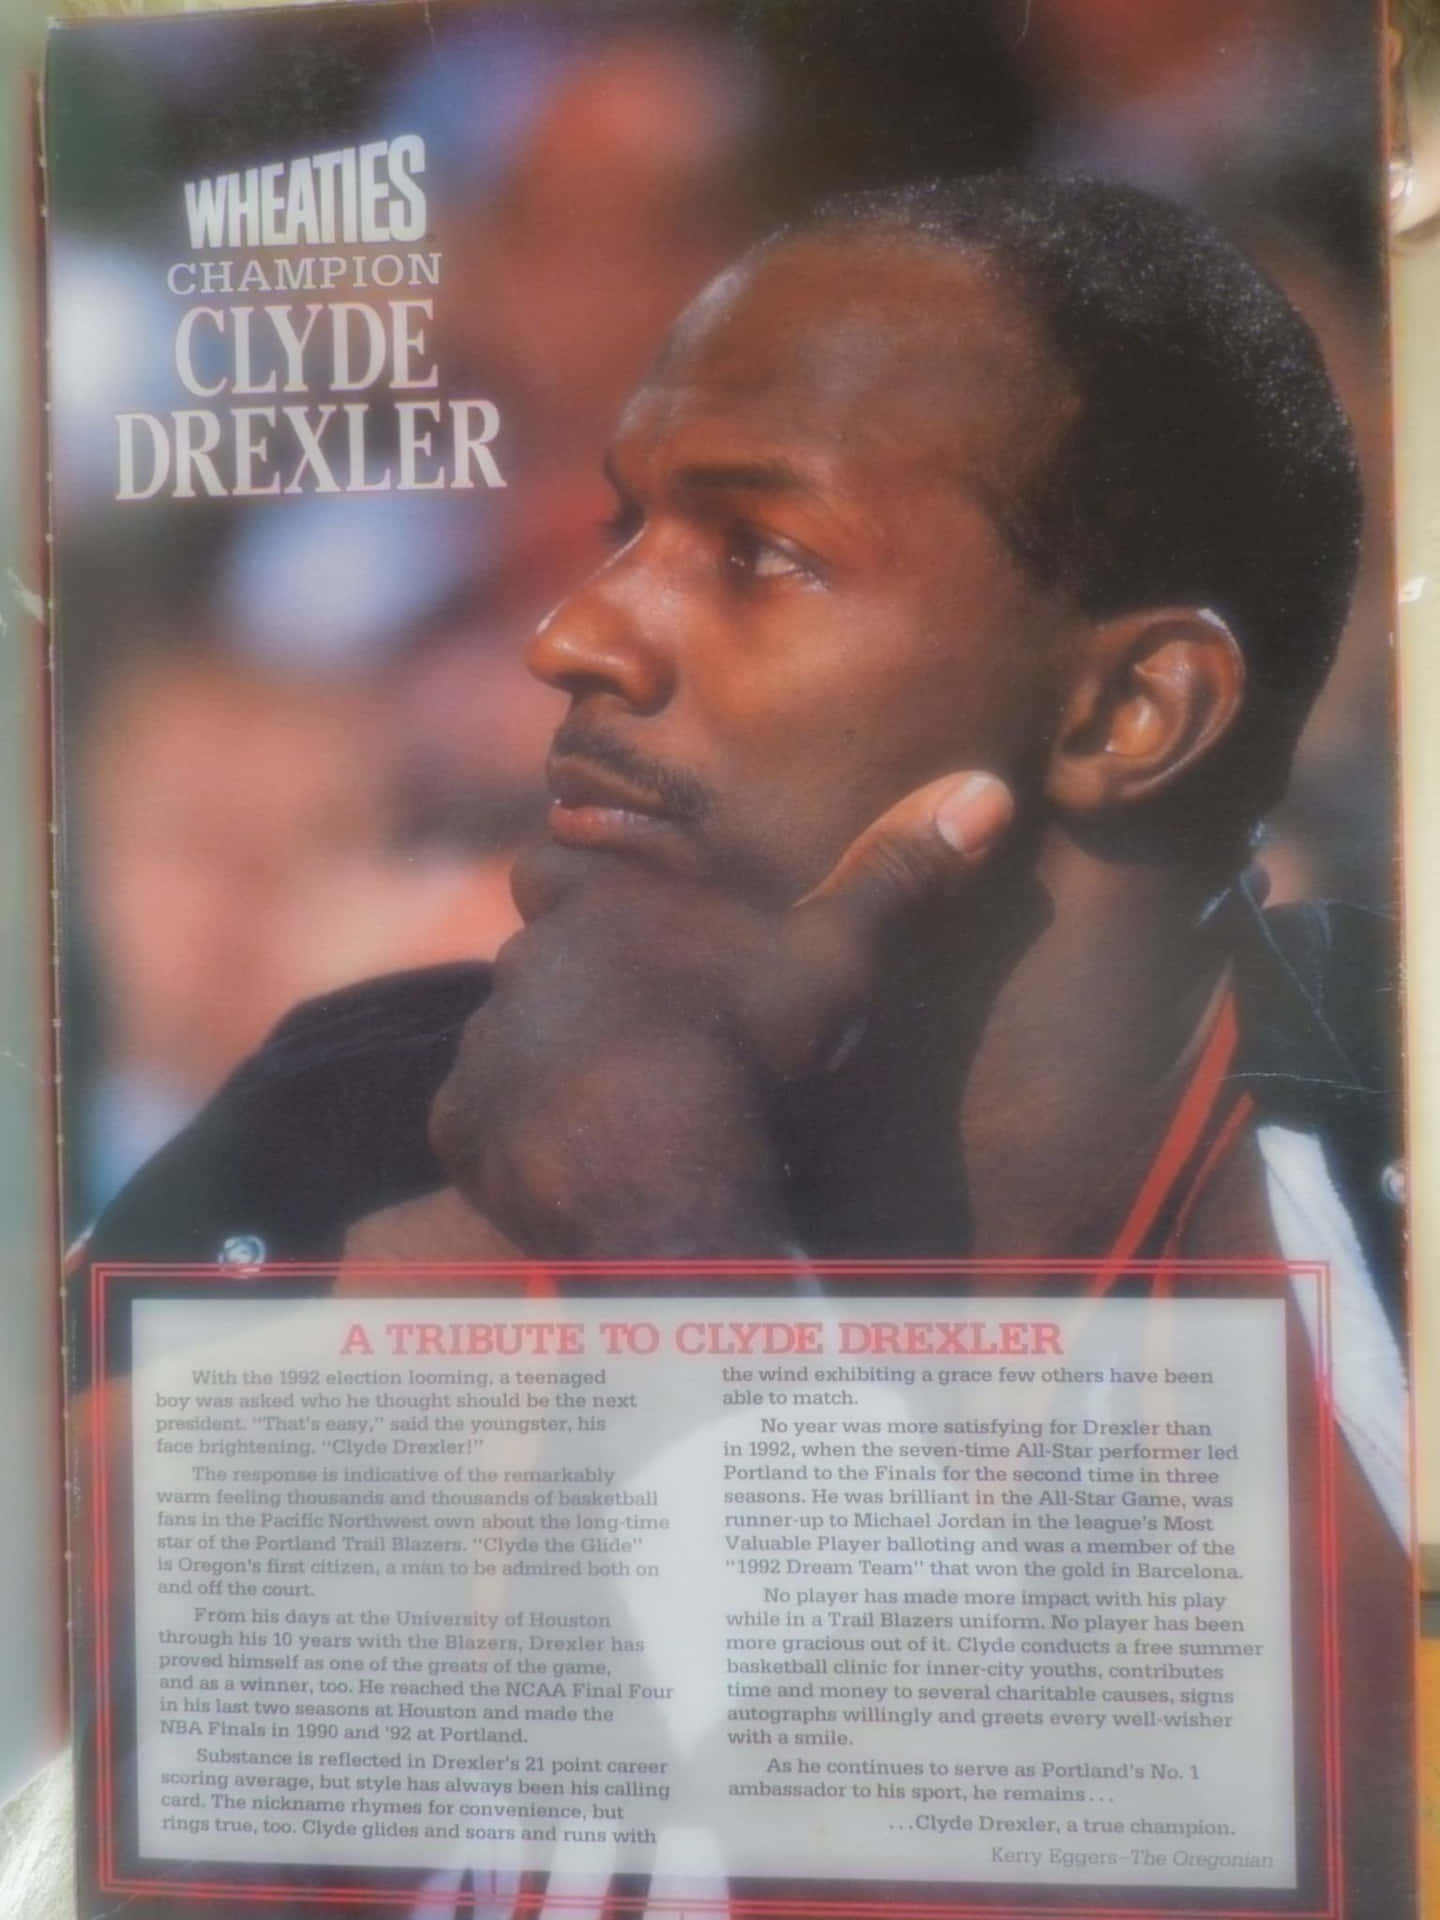 Clyde Drexler Wheaties Champion Article Tribute Wallpaper